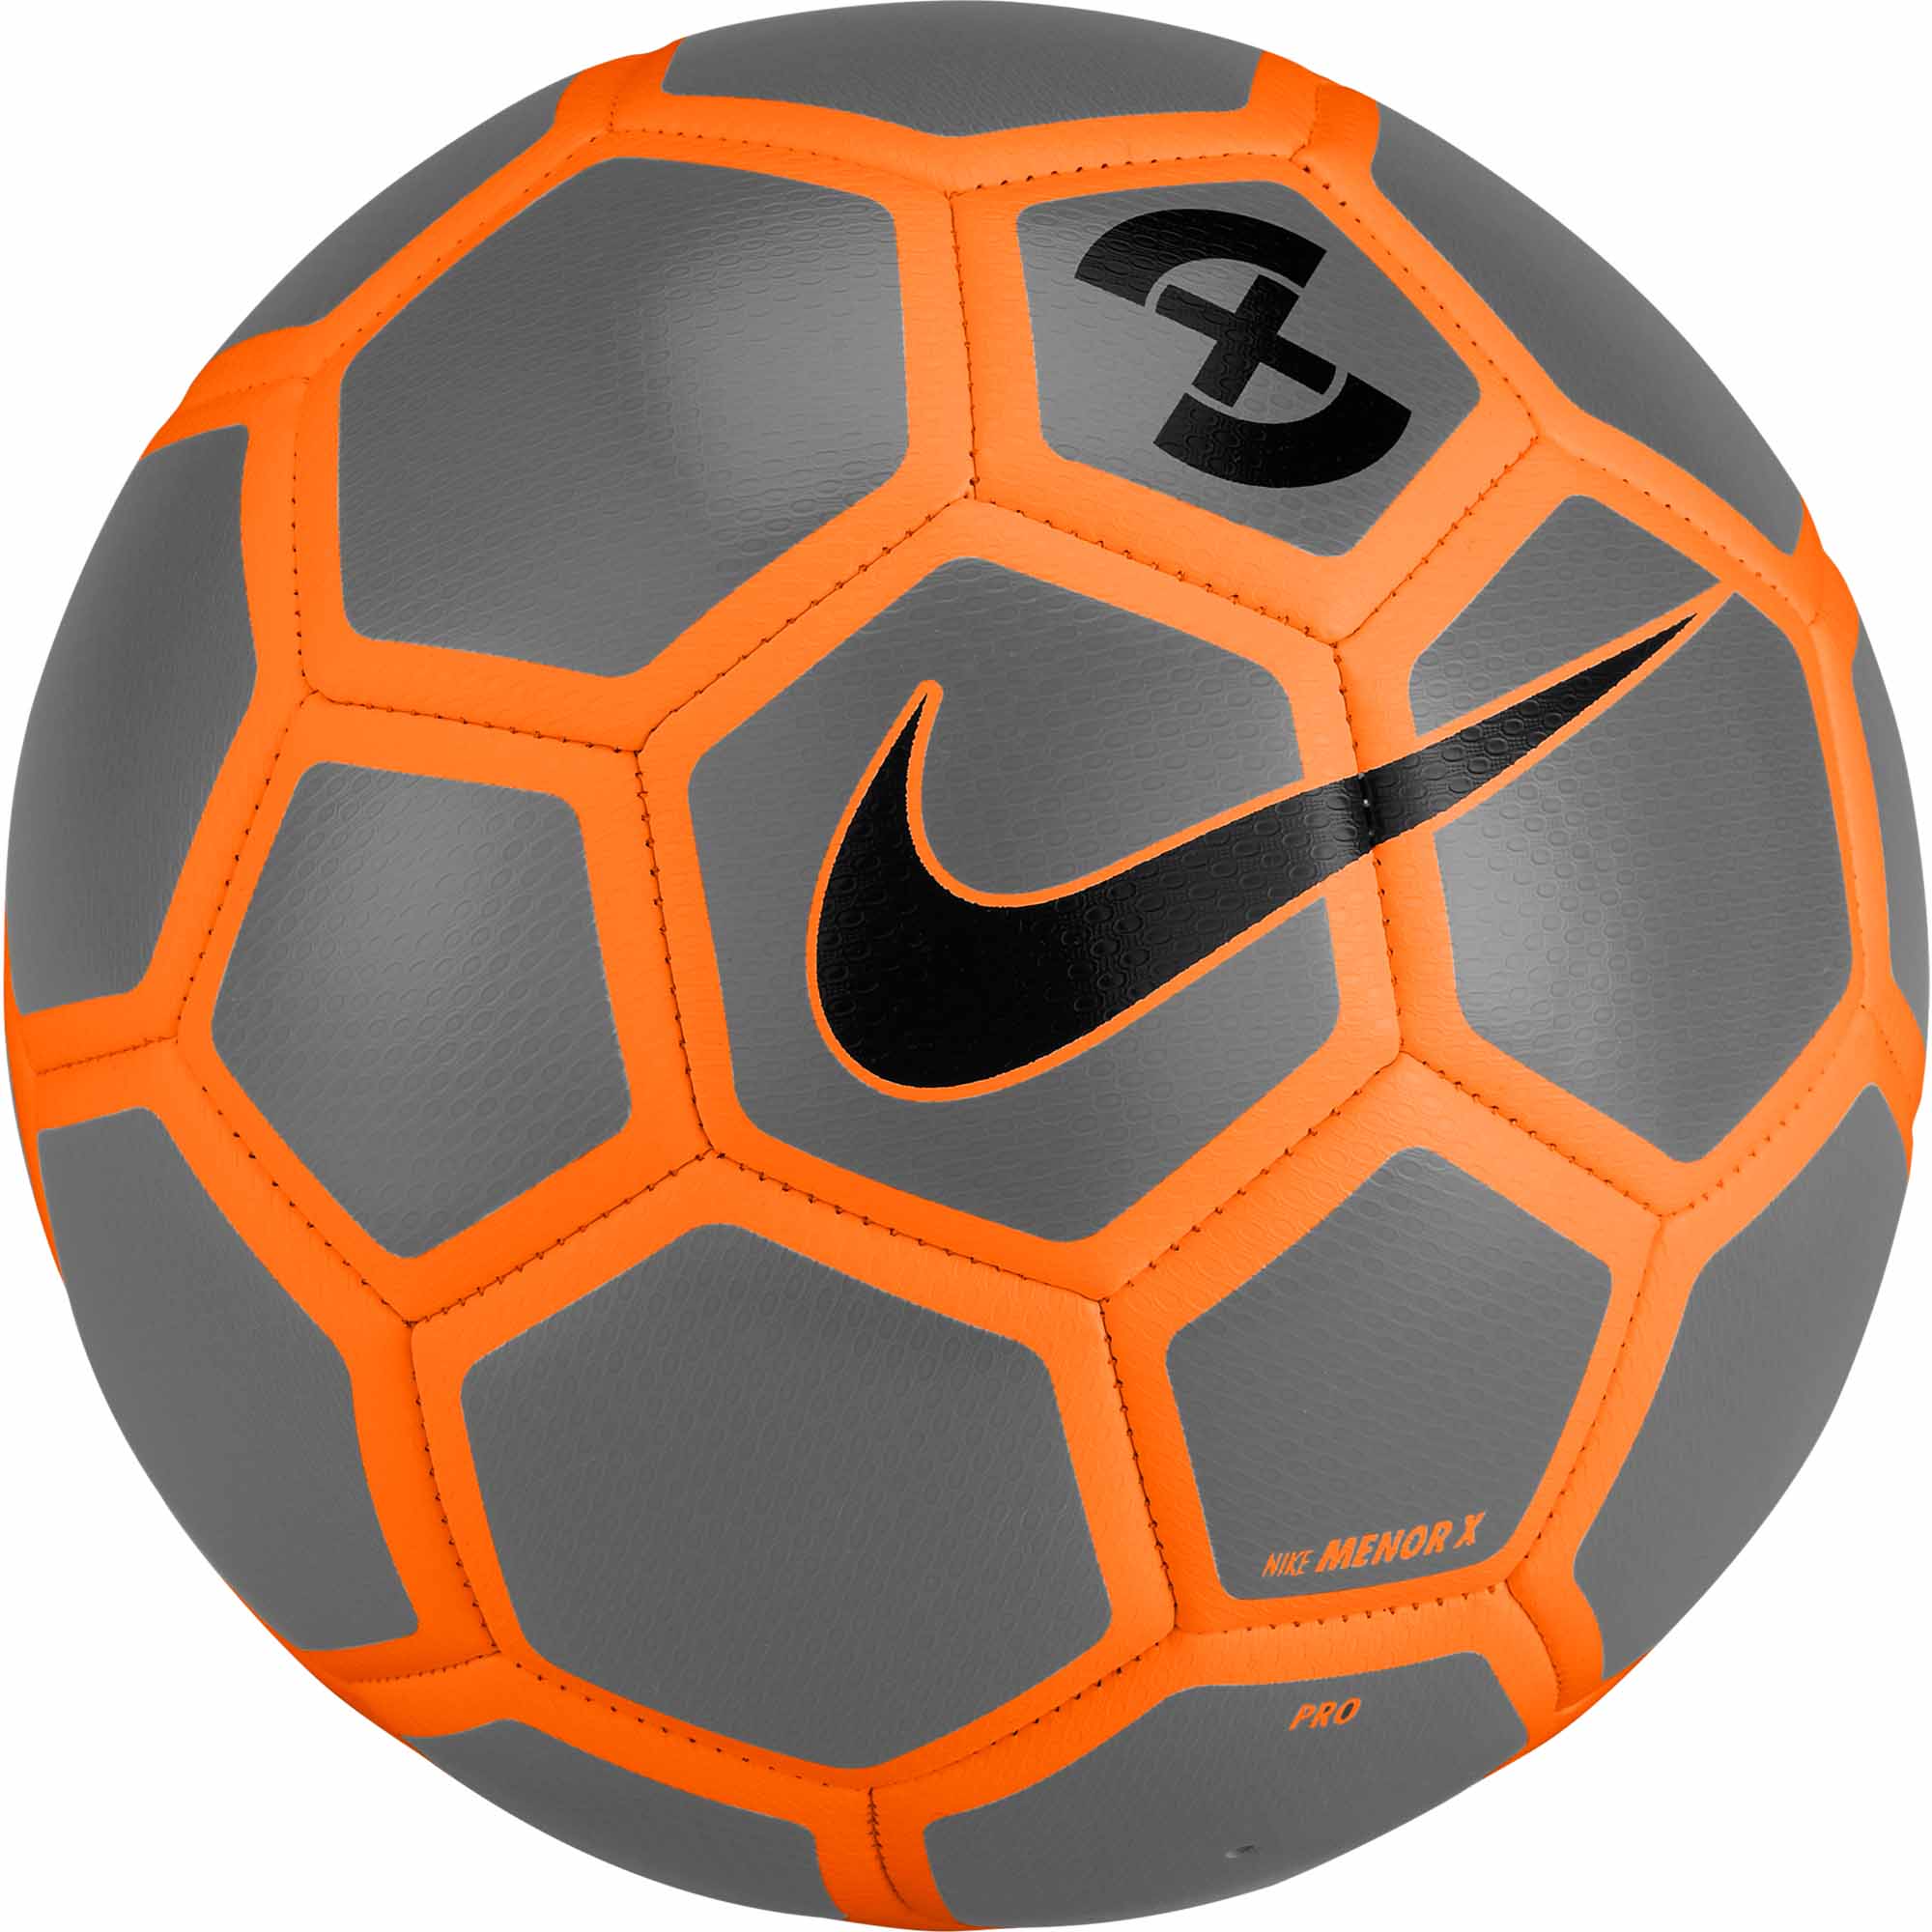 Perioperatieve periode redden Opwekking Nike Menor X Futsal Ball - Wolf Grey & Total Orange - Soccer Master